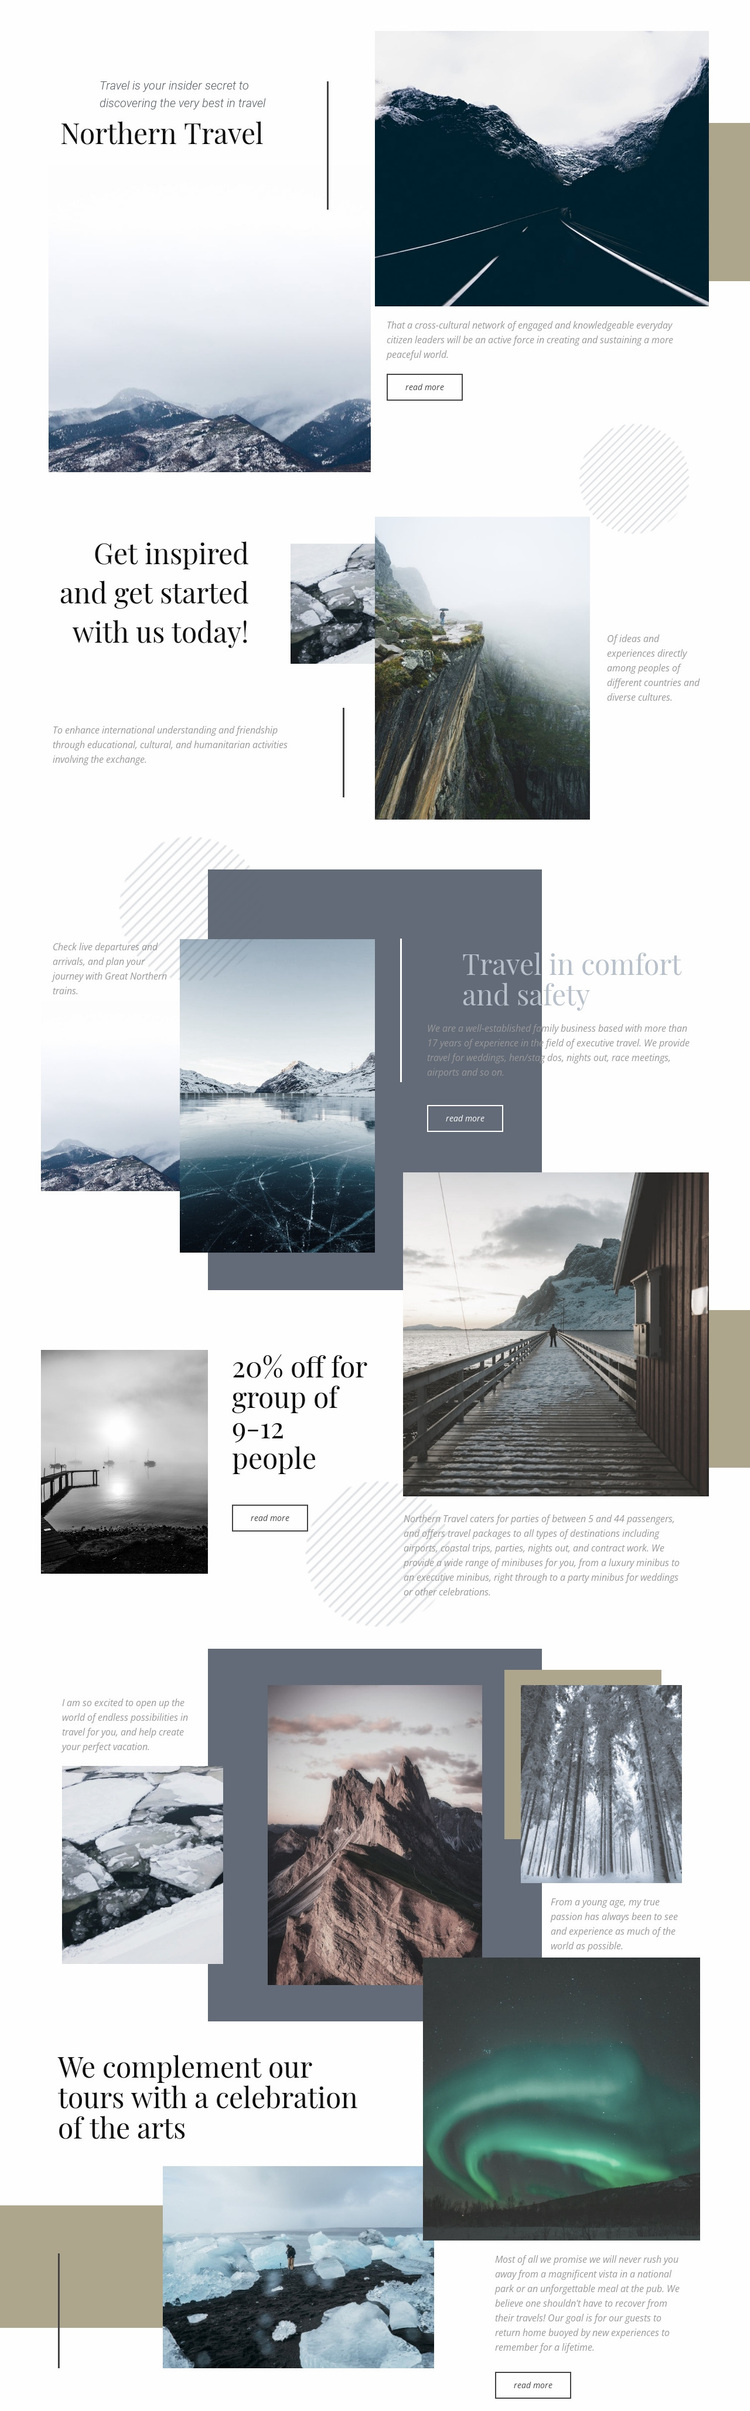 Northern Travel Website Design